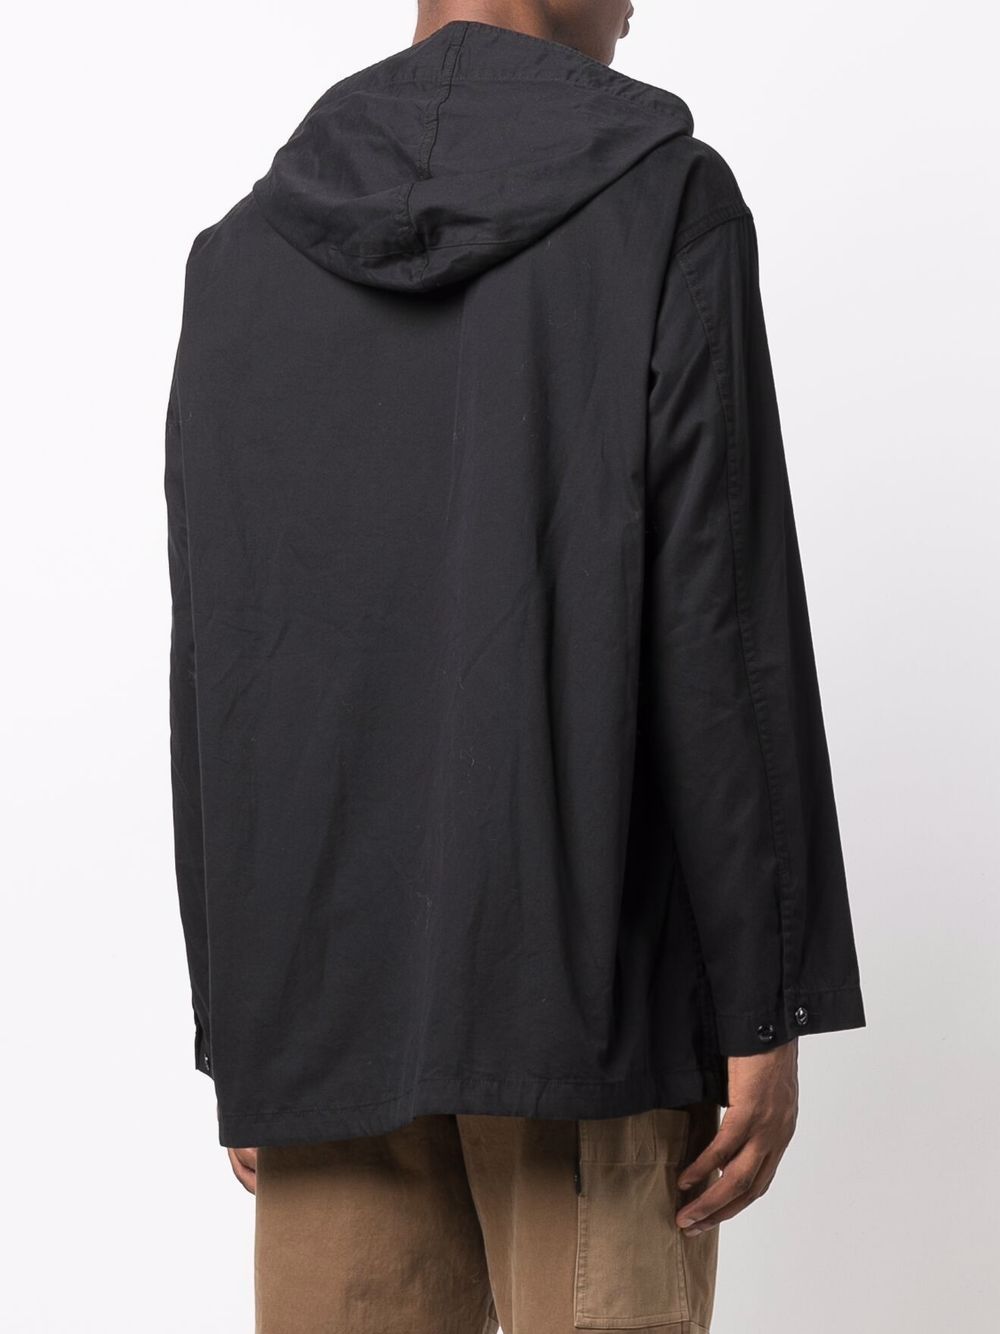 фото Engineered garments анорак с капюшоном